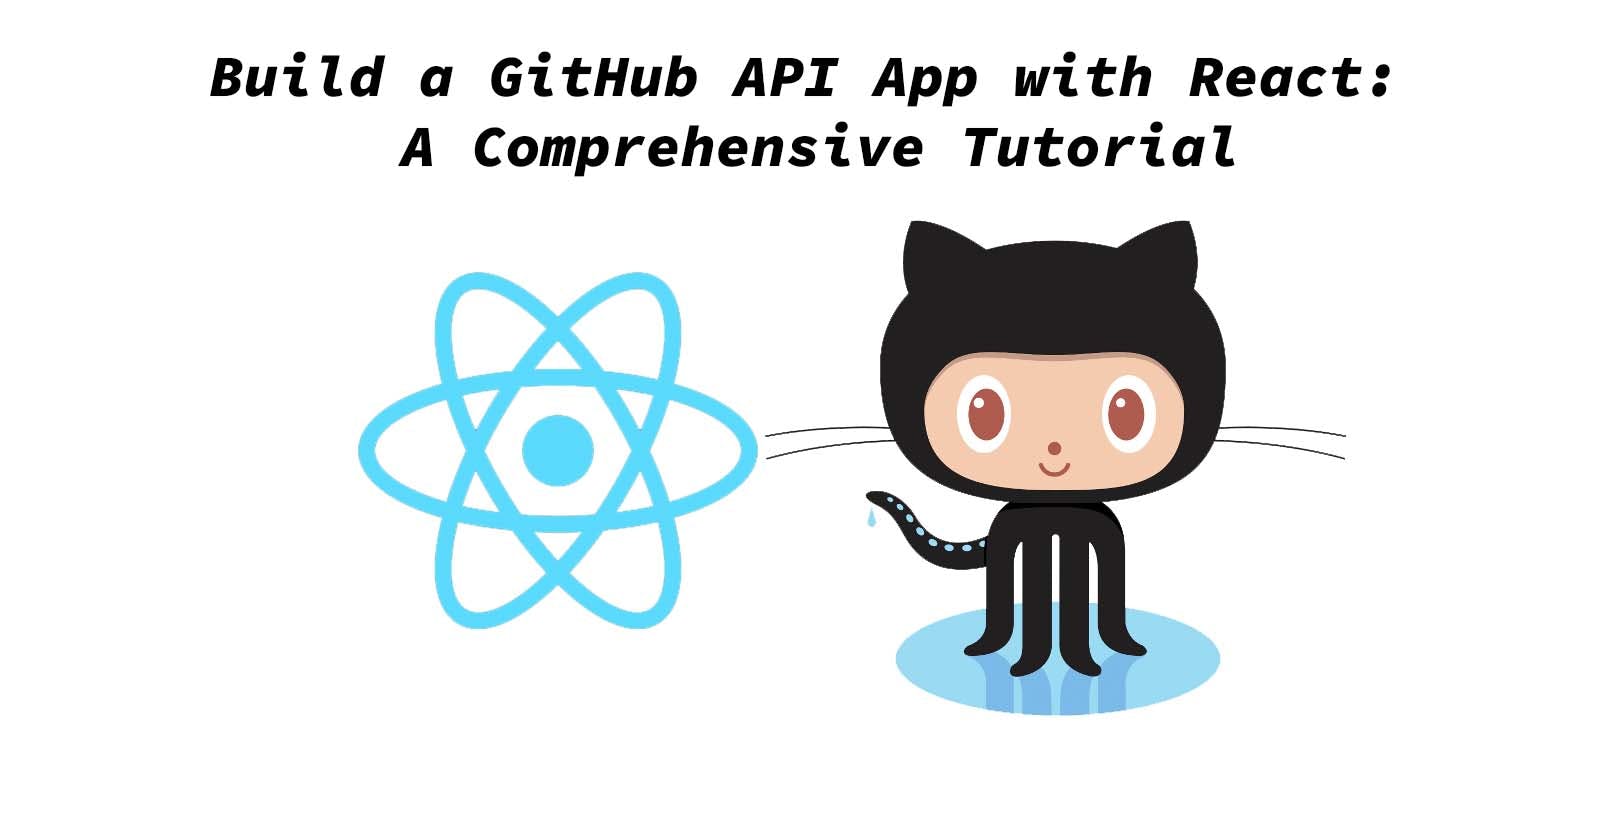 Build a GitHub API App with React: 
A Comprehensive Tutorial